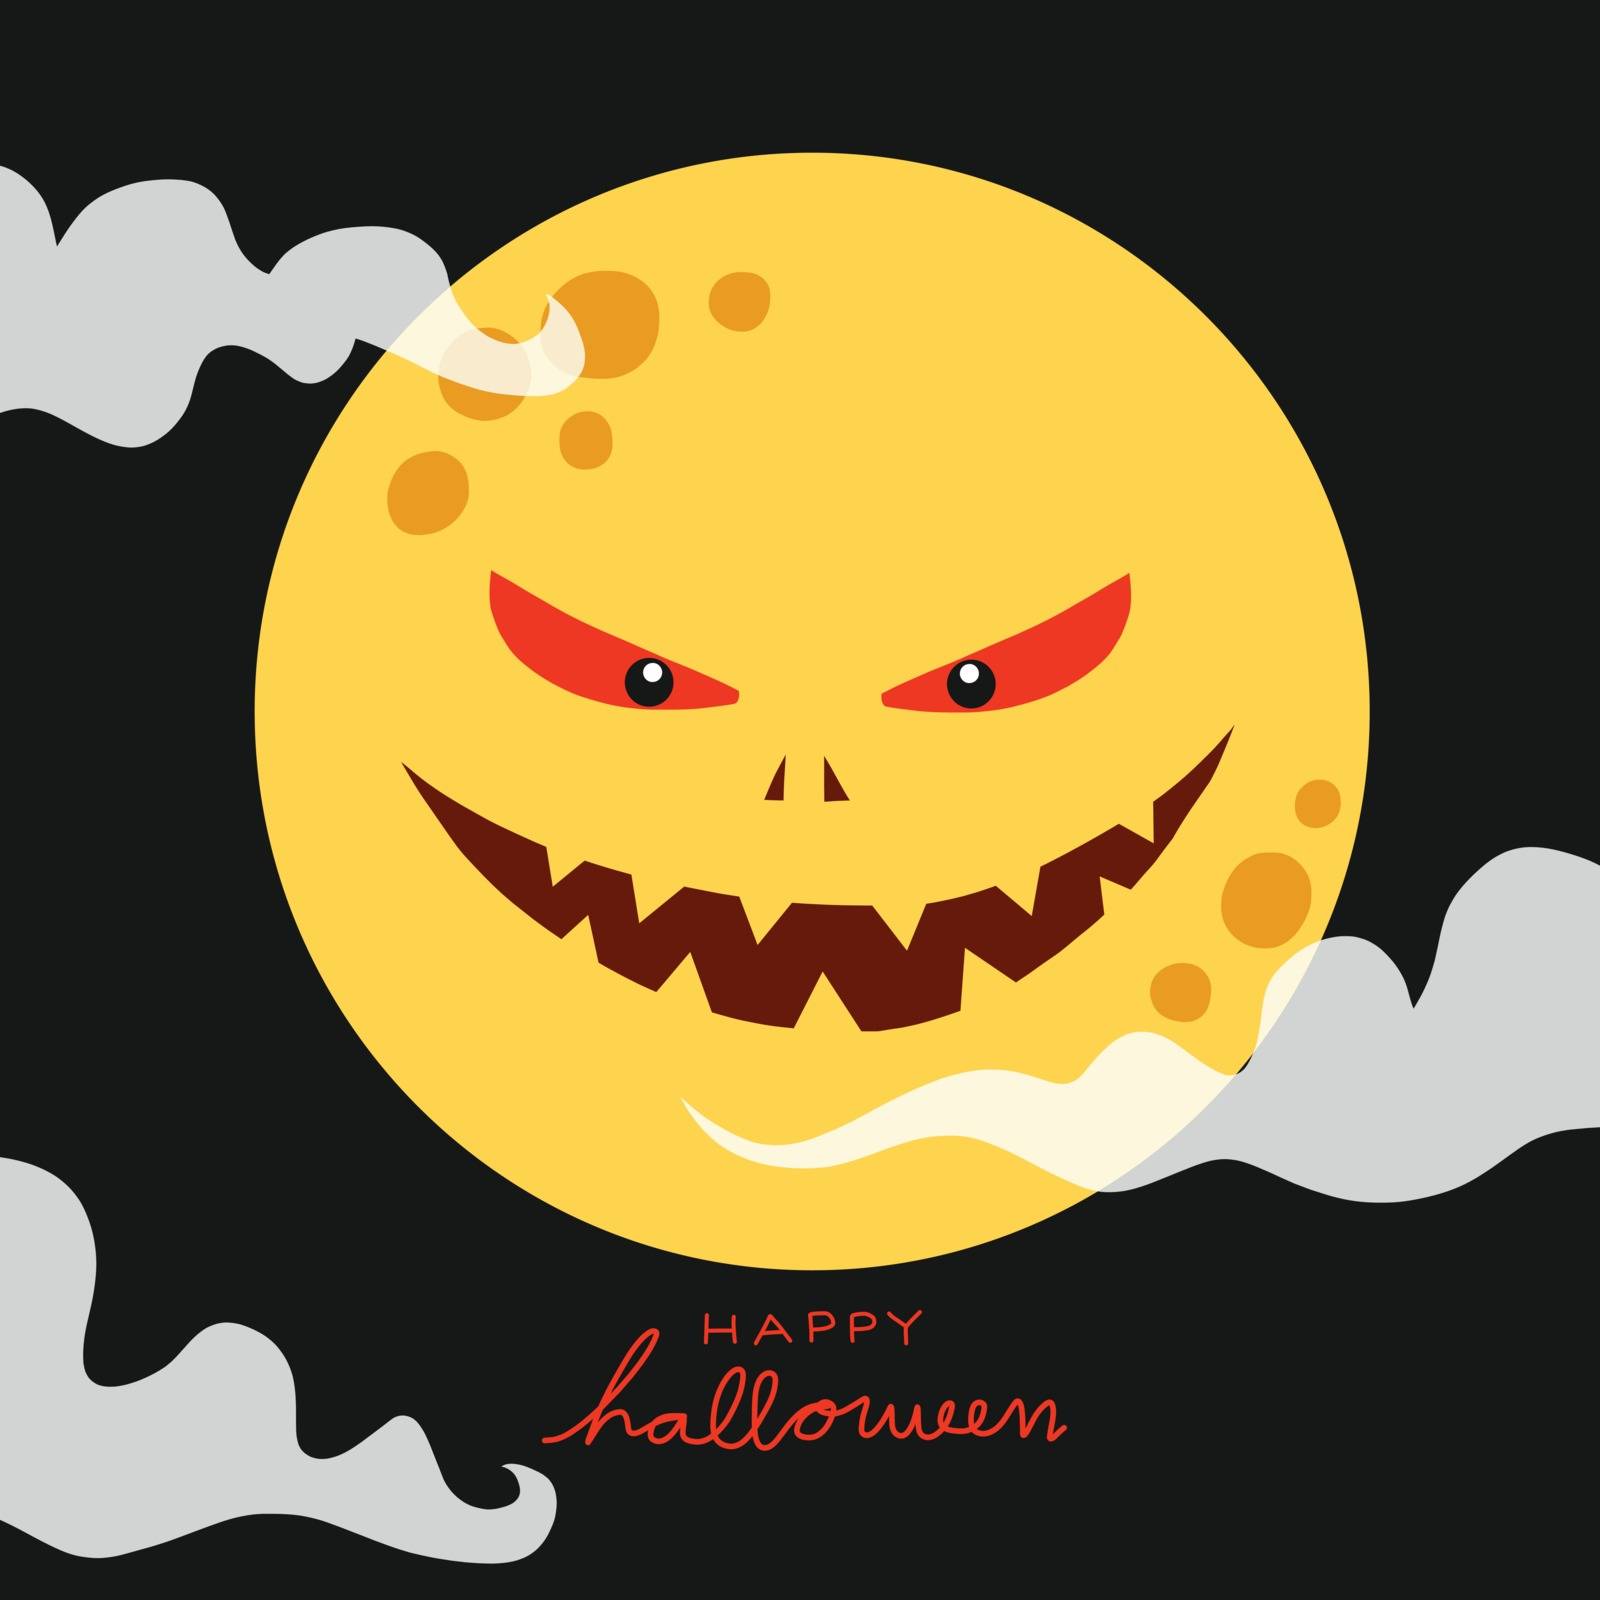 Full moon monster happy Halloween night cartoon vector illustration